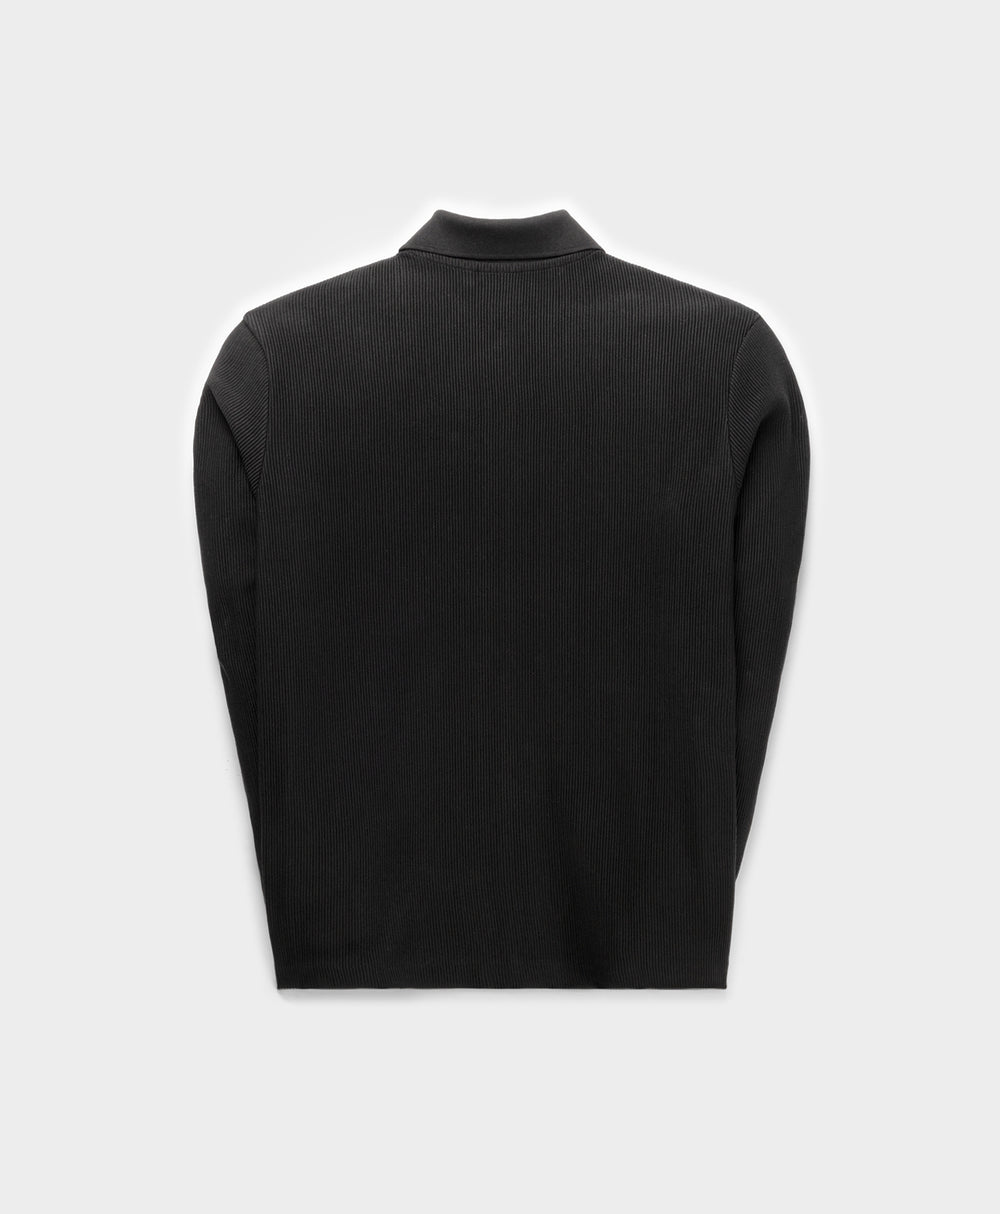 DP - Black Parram Shirt - Packshot - Rear